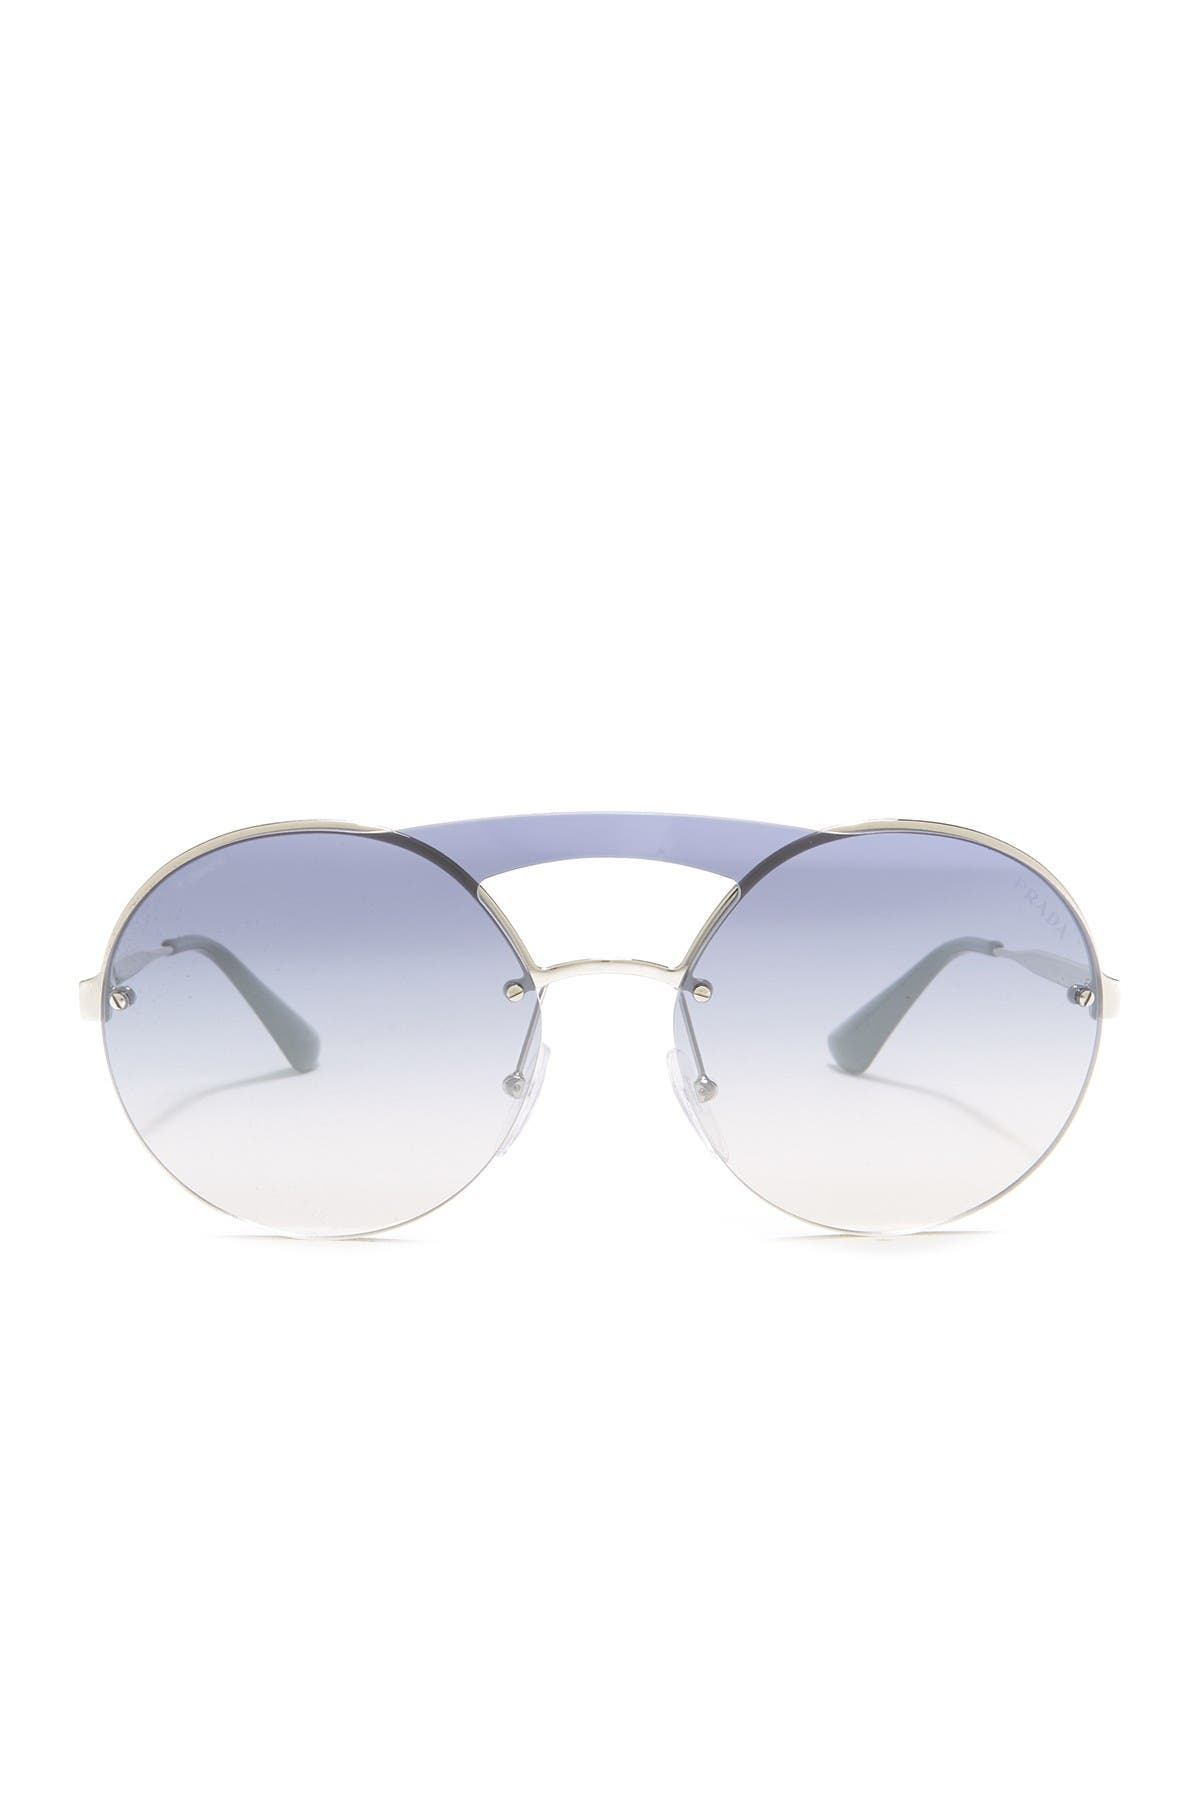 prada 36mm round sunglasses